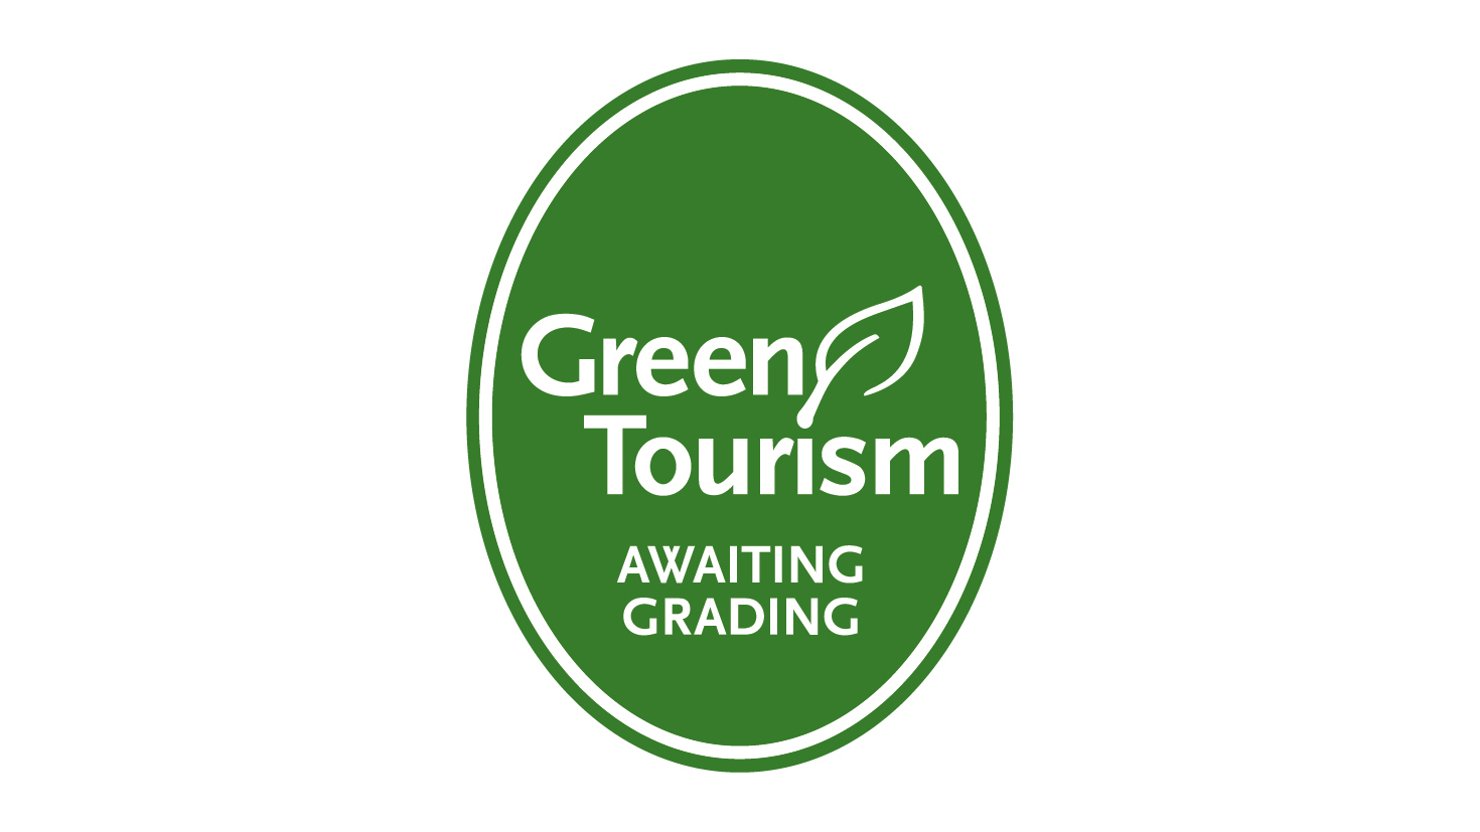 Green Tourism awaiting grading logo